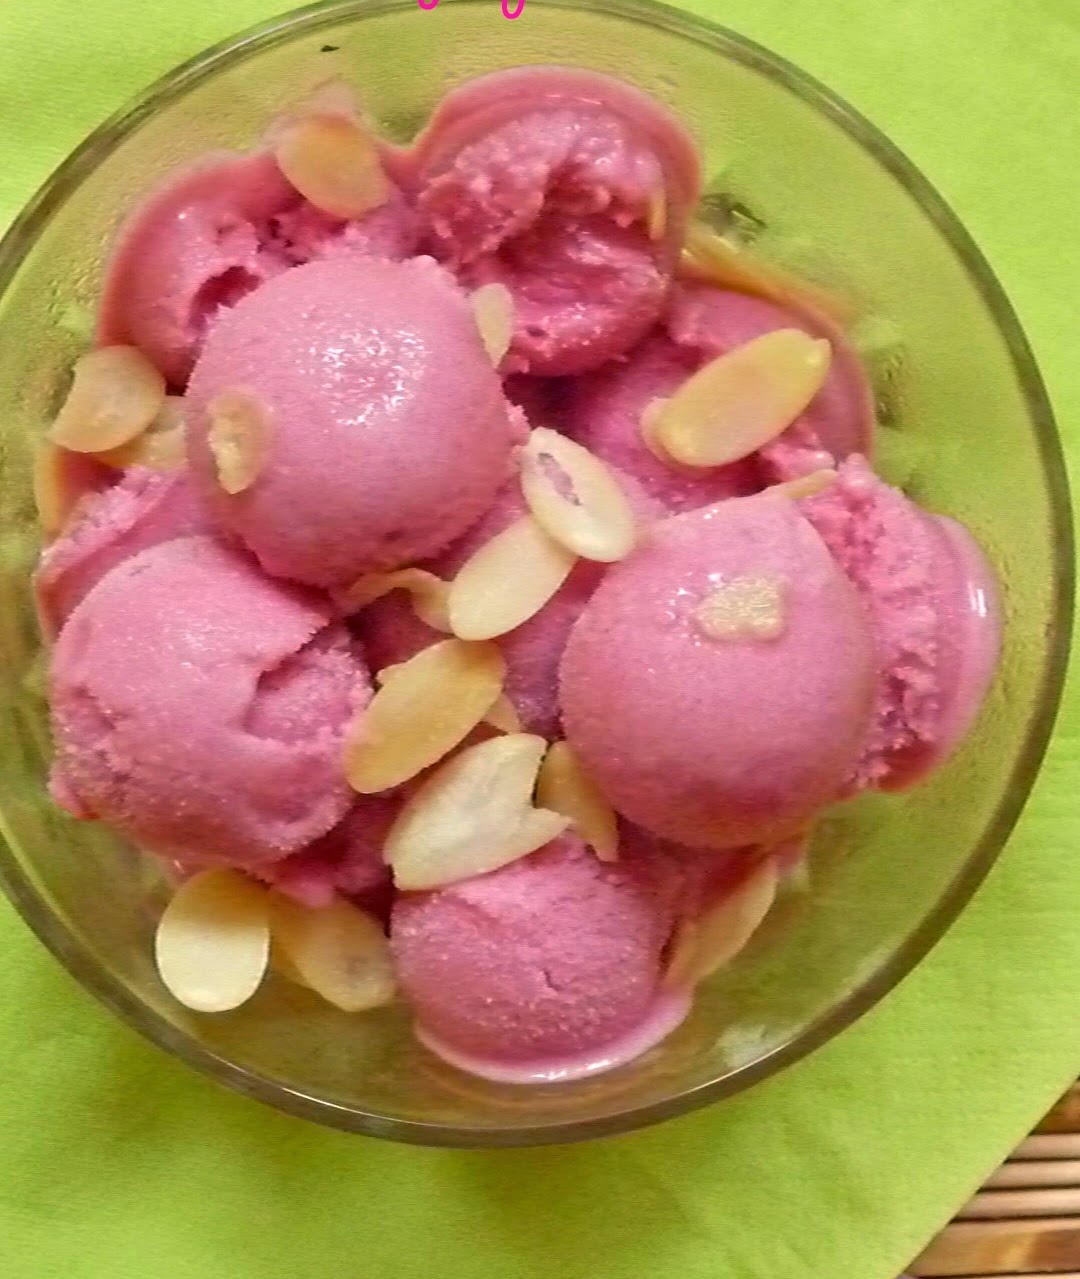 http://theseamanmom.com/raspberry-greek-yogurt-ice-cream/